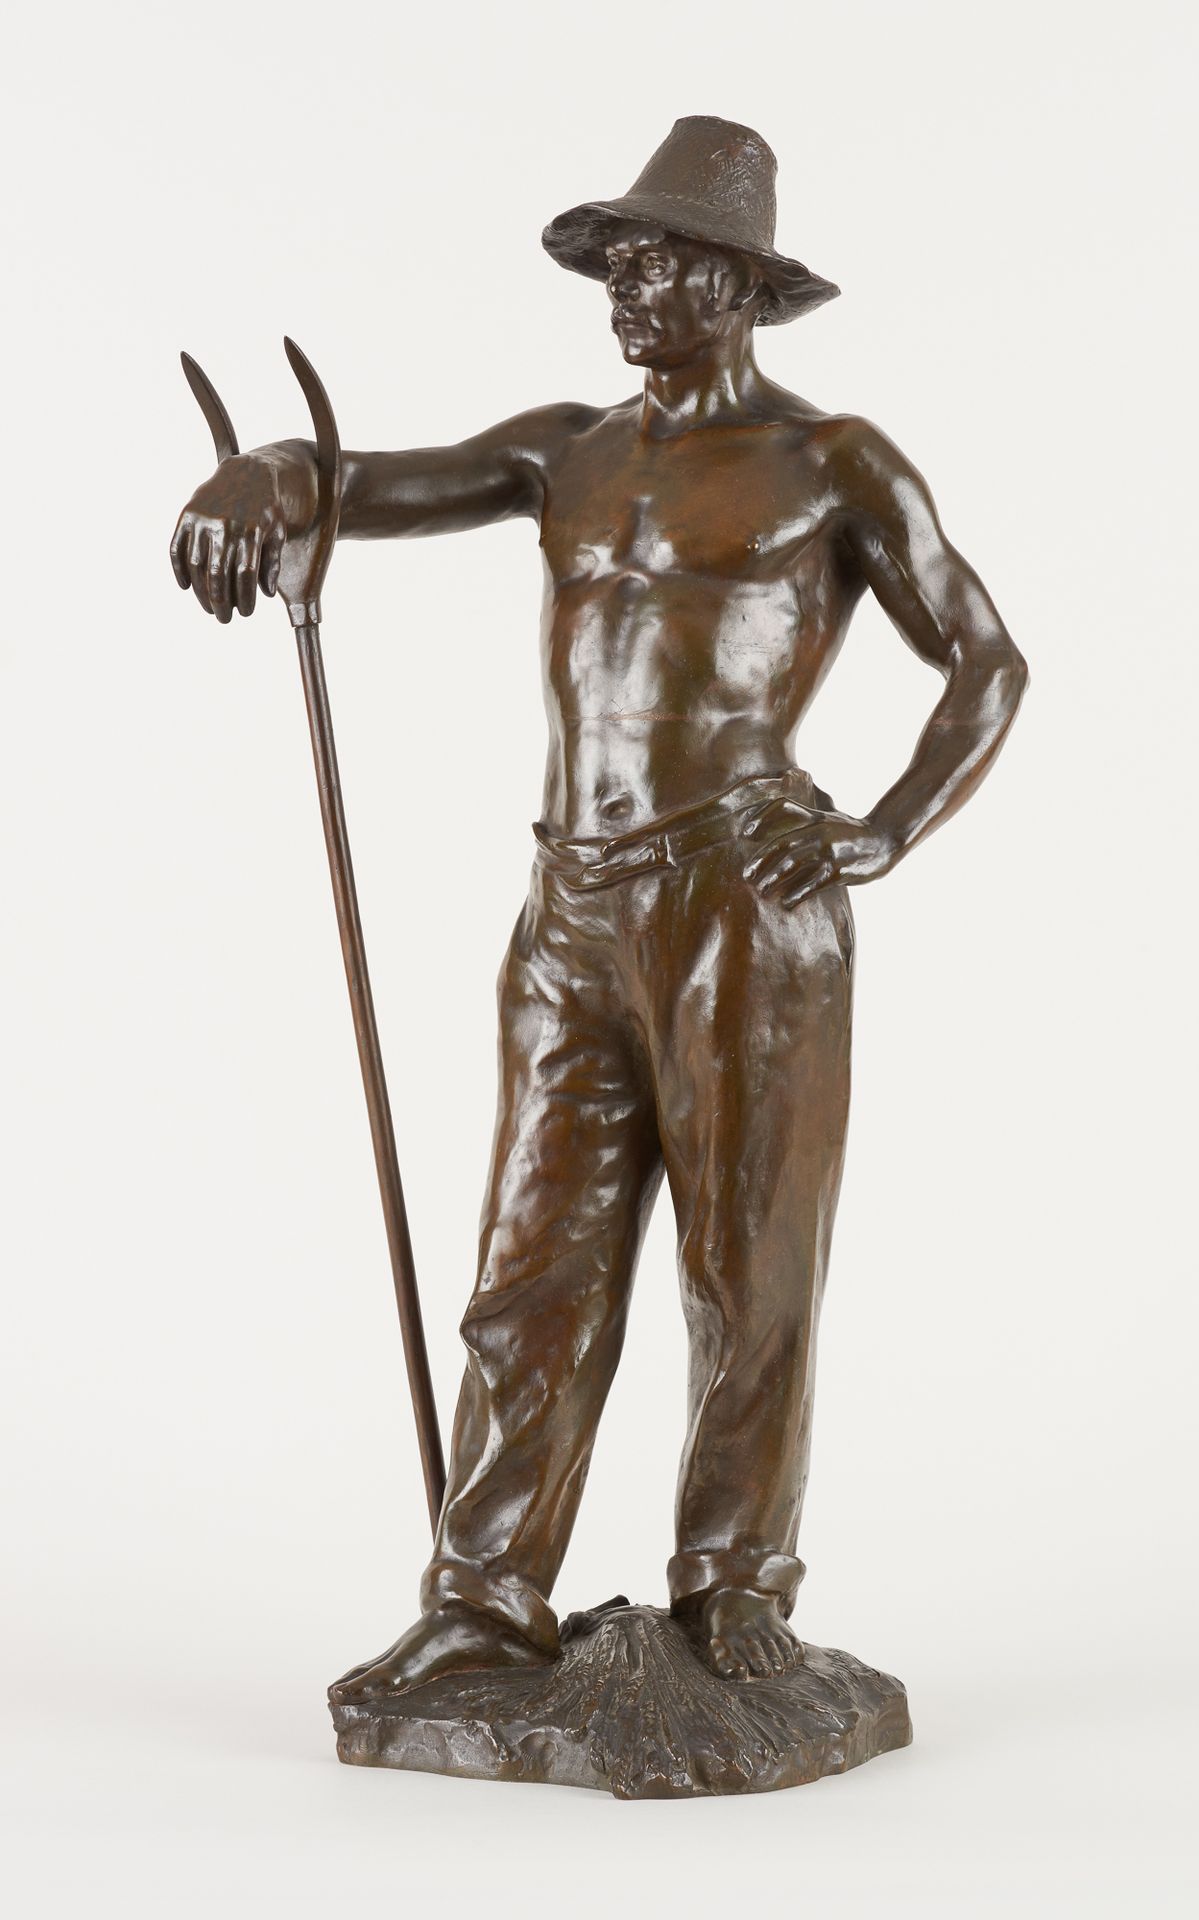 Godefroid DEVREESE École belge (1861-1941) 带有棕色铜锈的青铜雕塑："驯鹿"。

签名：G. De Vresse。

&hellip;